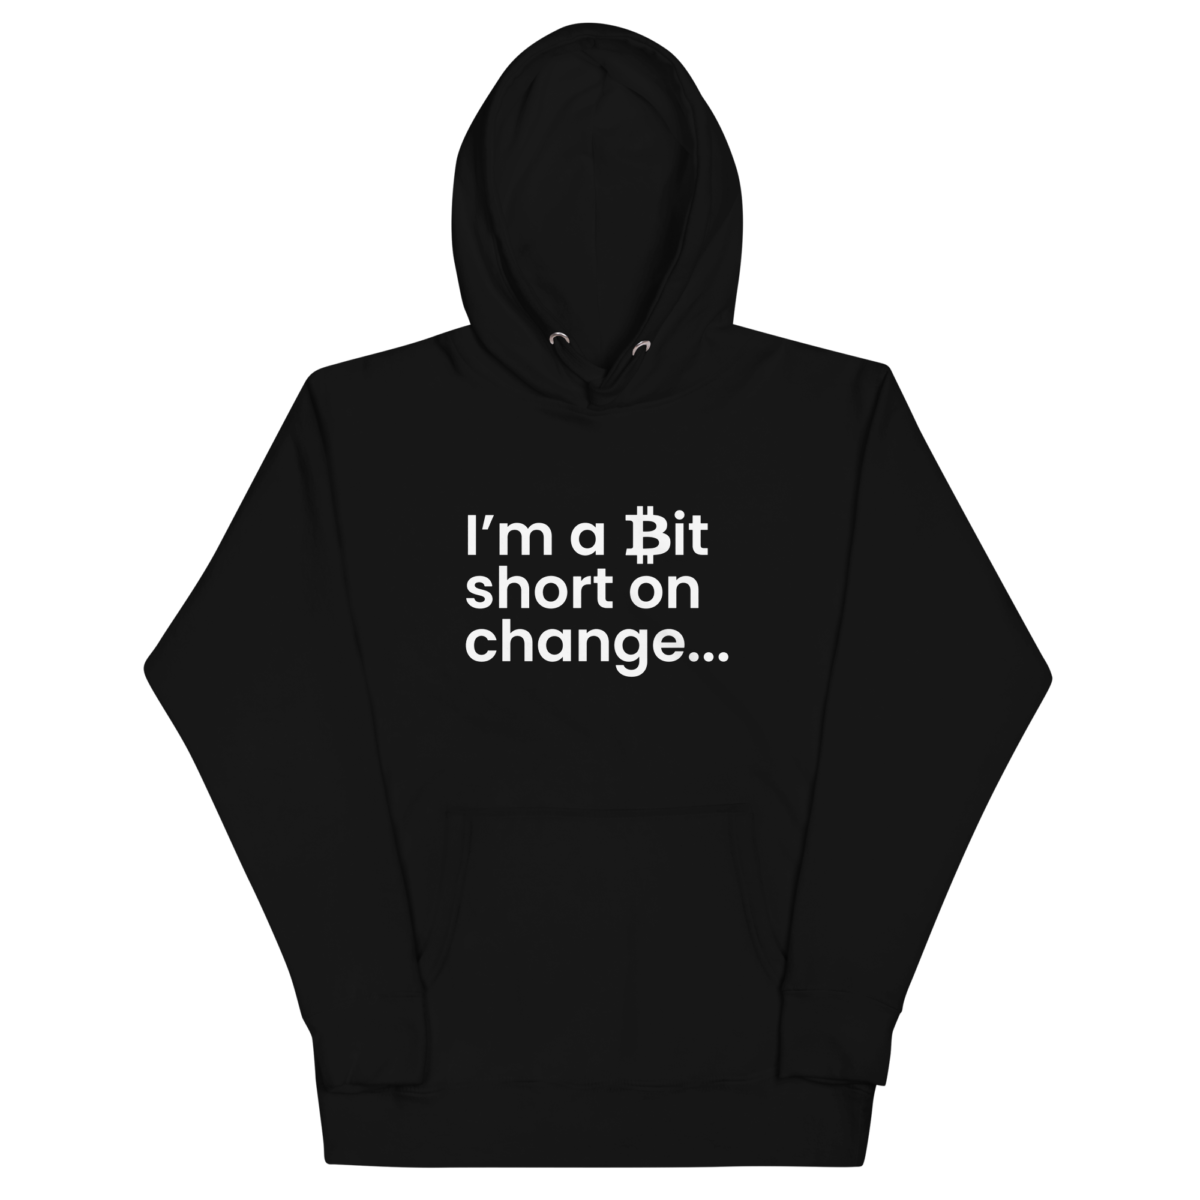 unisex premium hoodie black front 6330d015038a3 - I'm a Bit Short on Change Hoodie